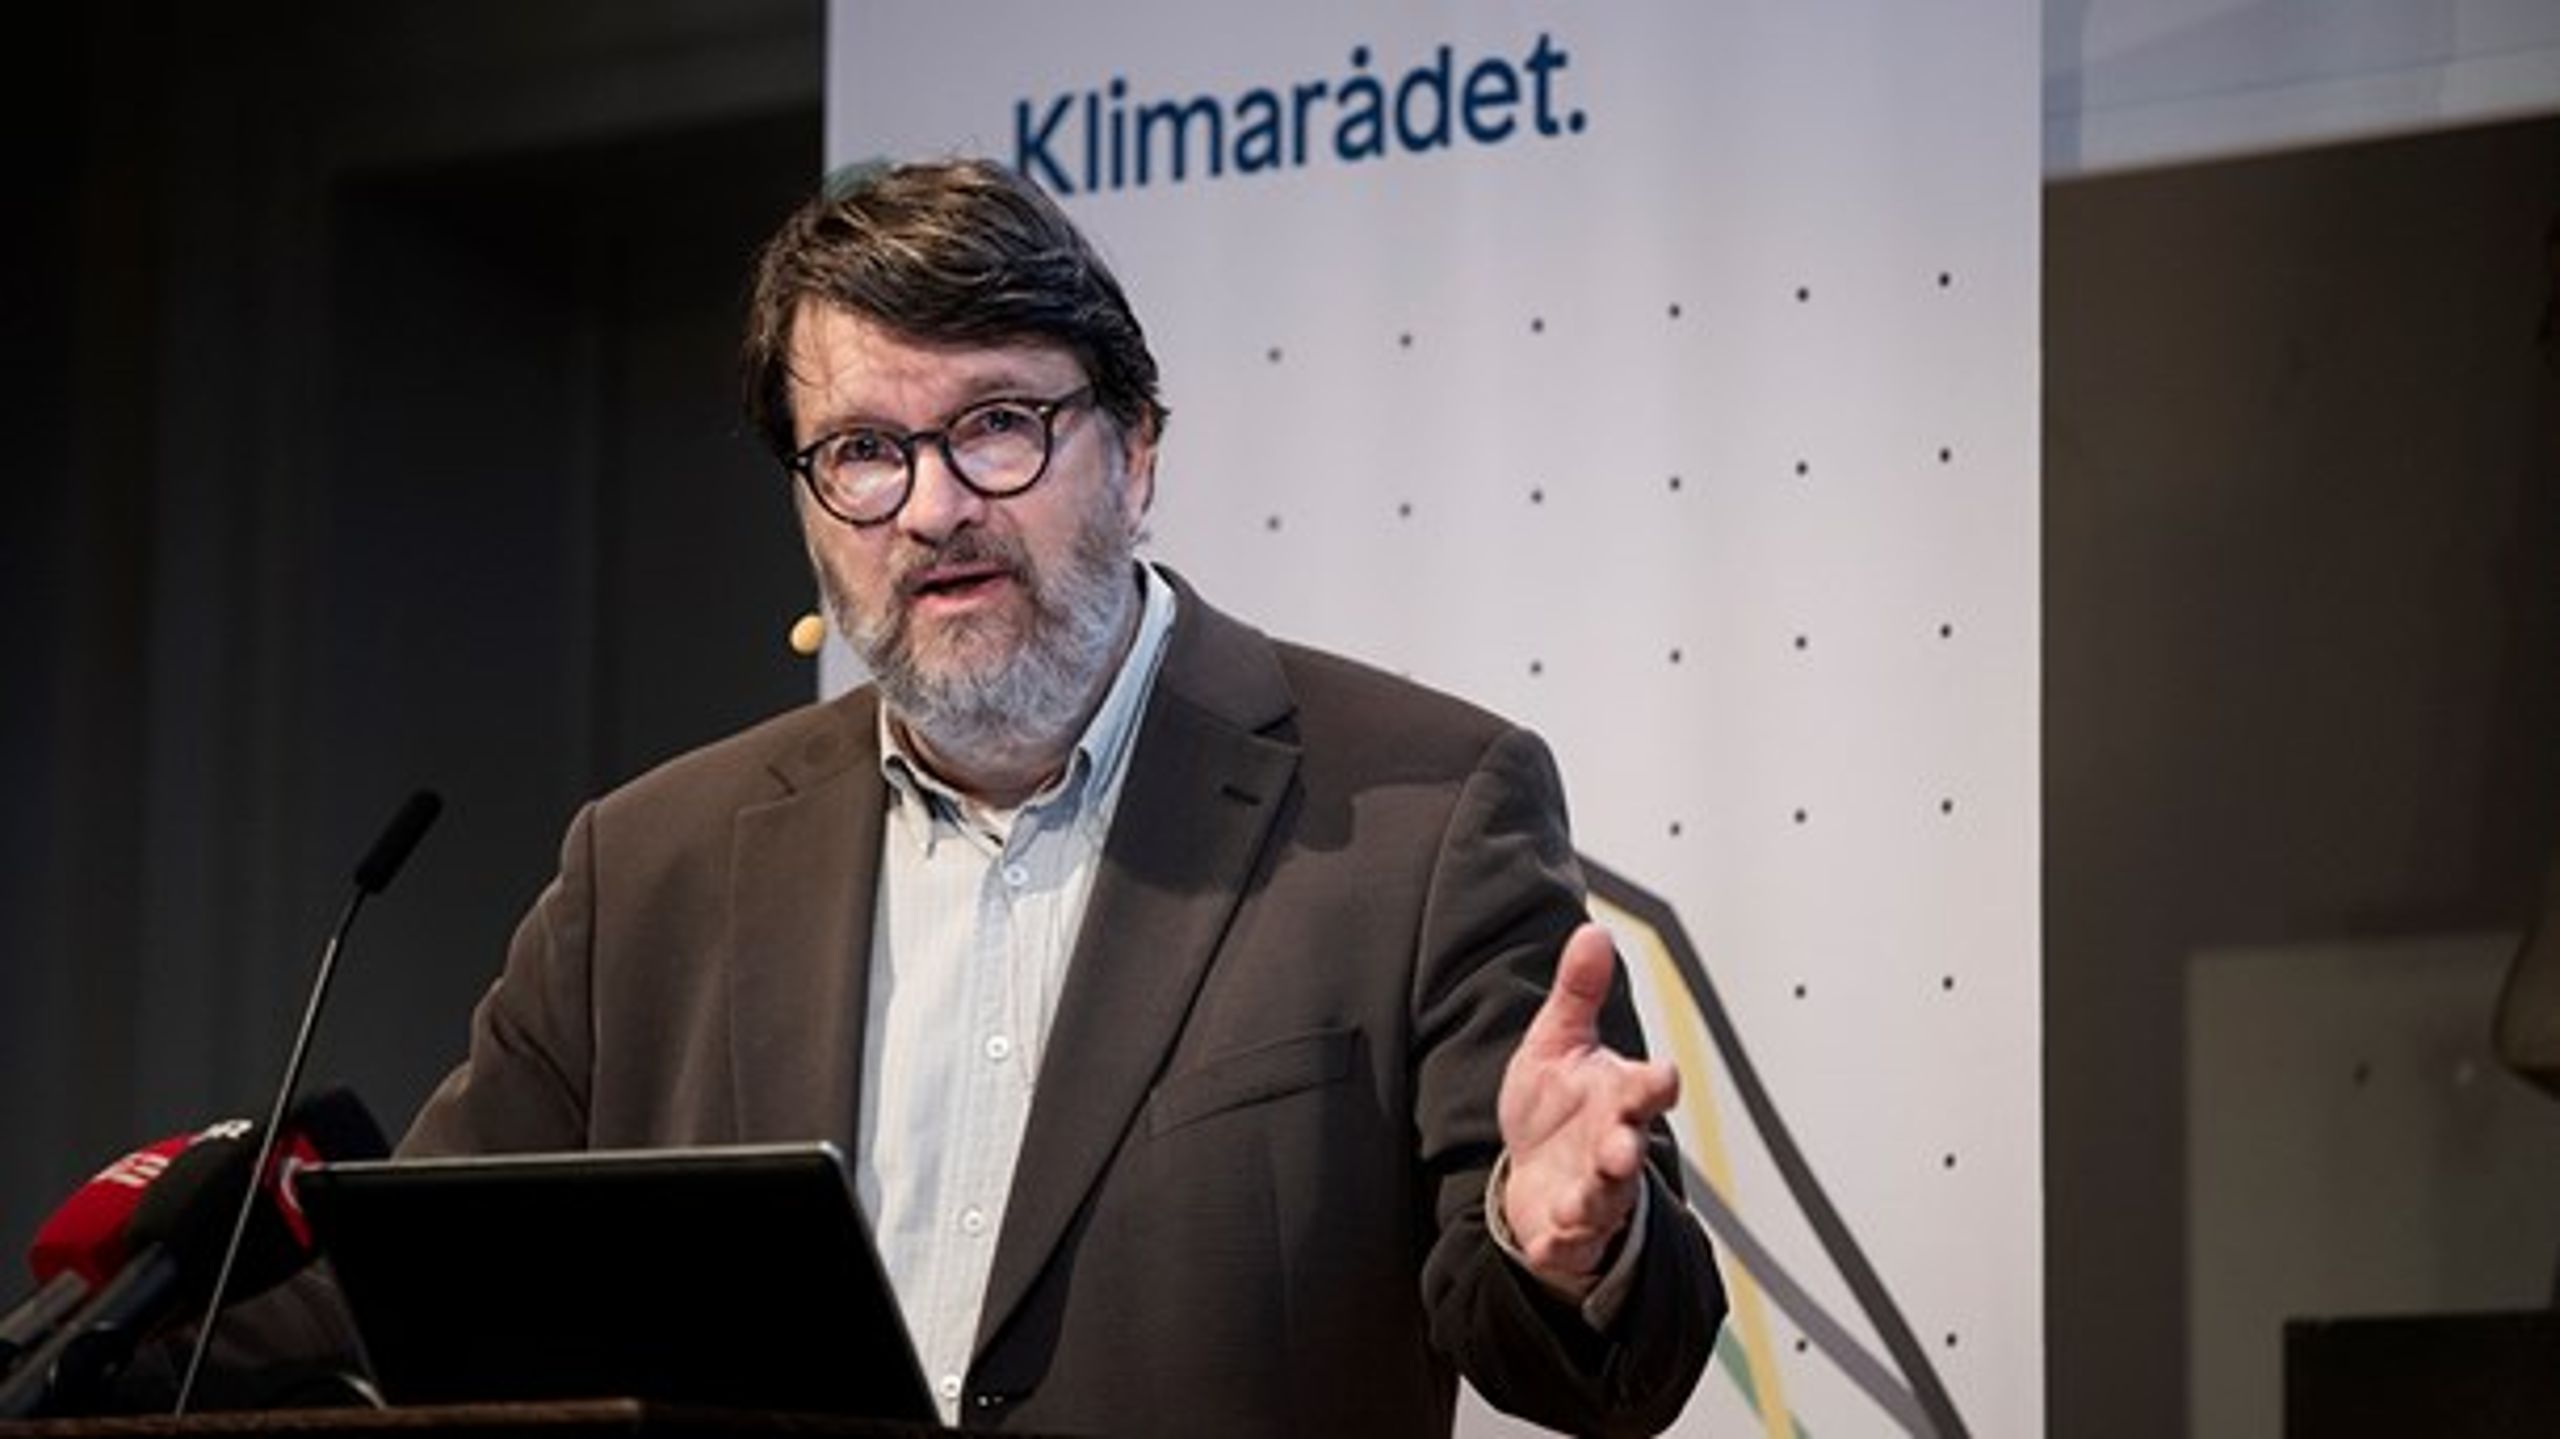 Peter Birch Sørensen stopper som formand for Klimarådet.